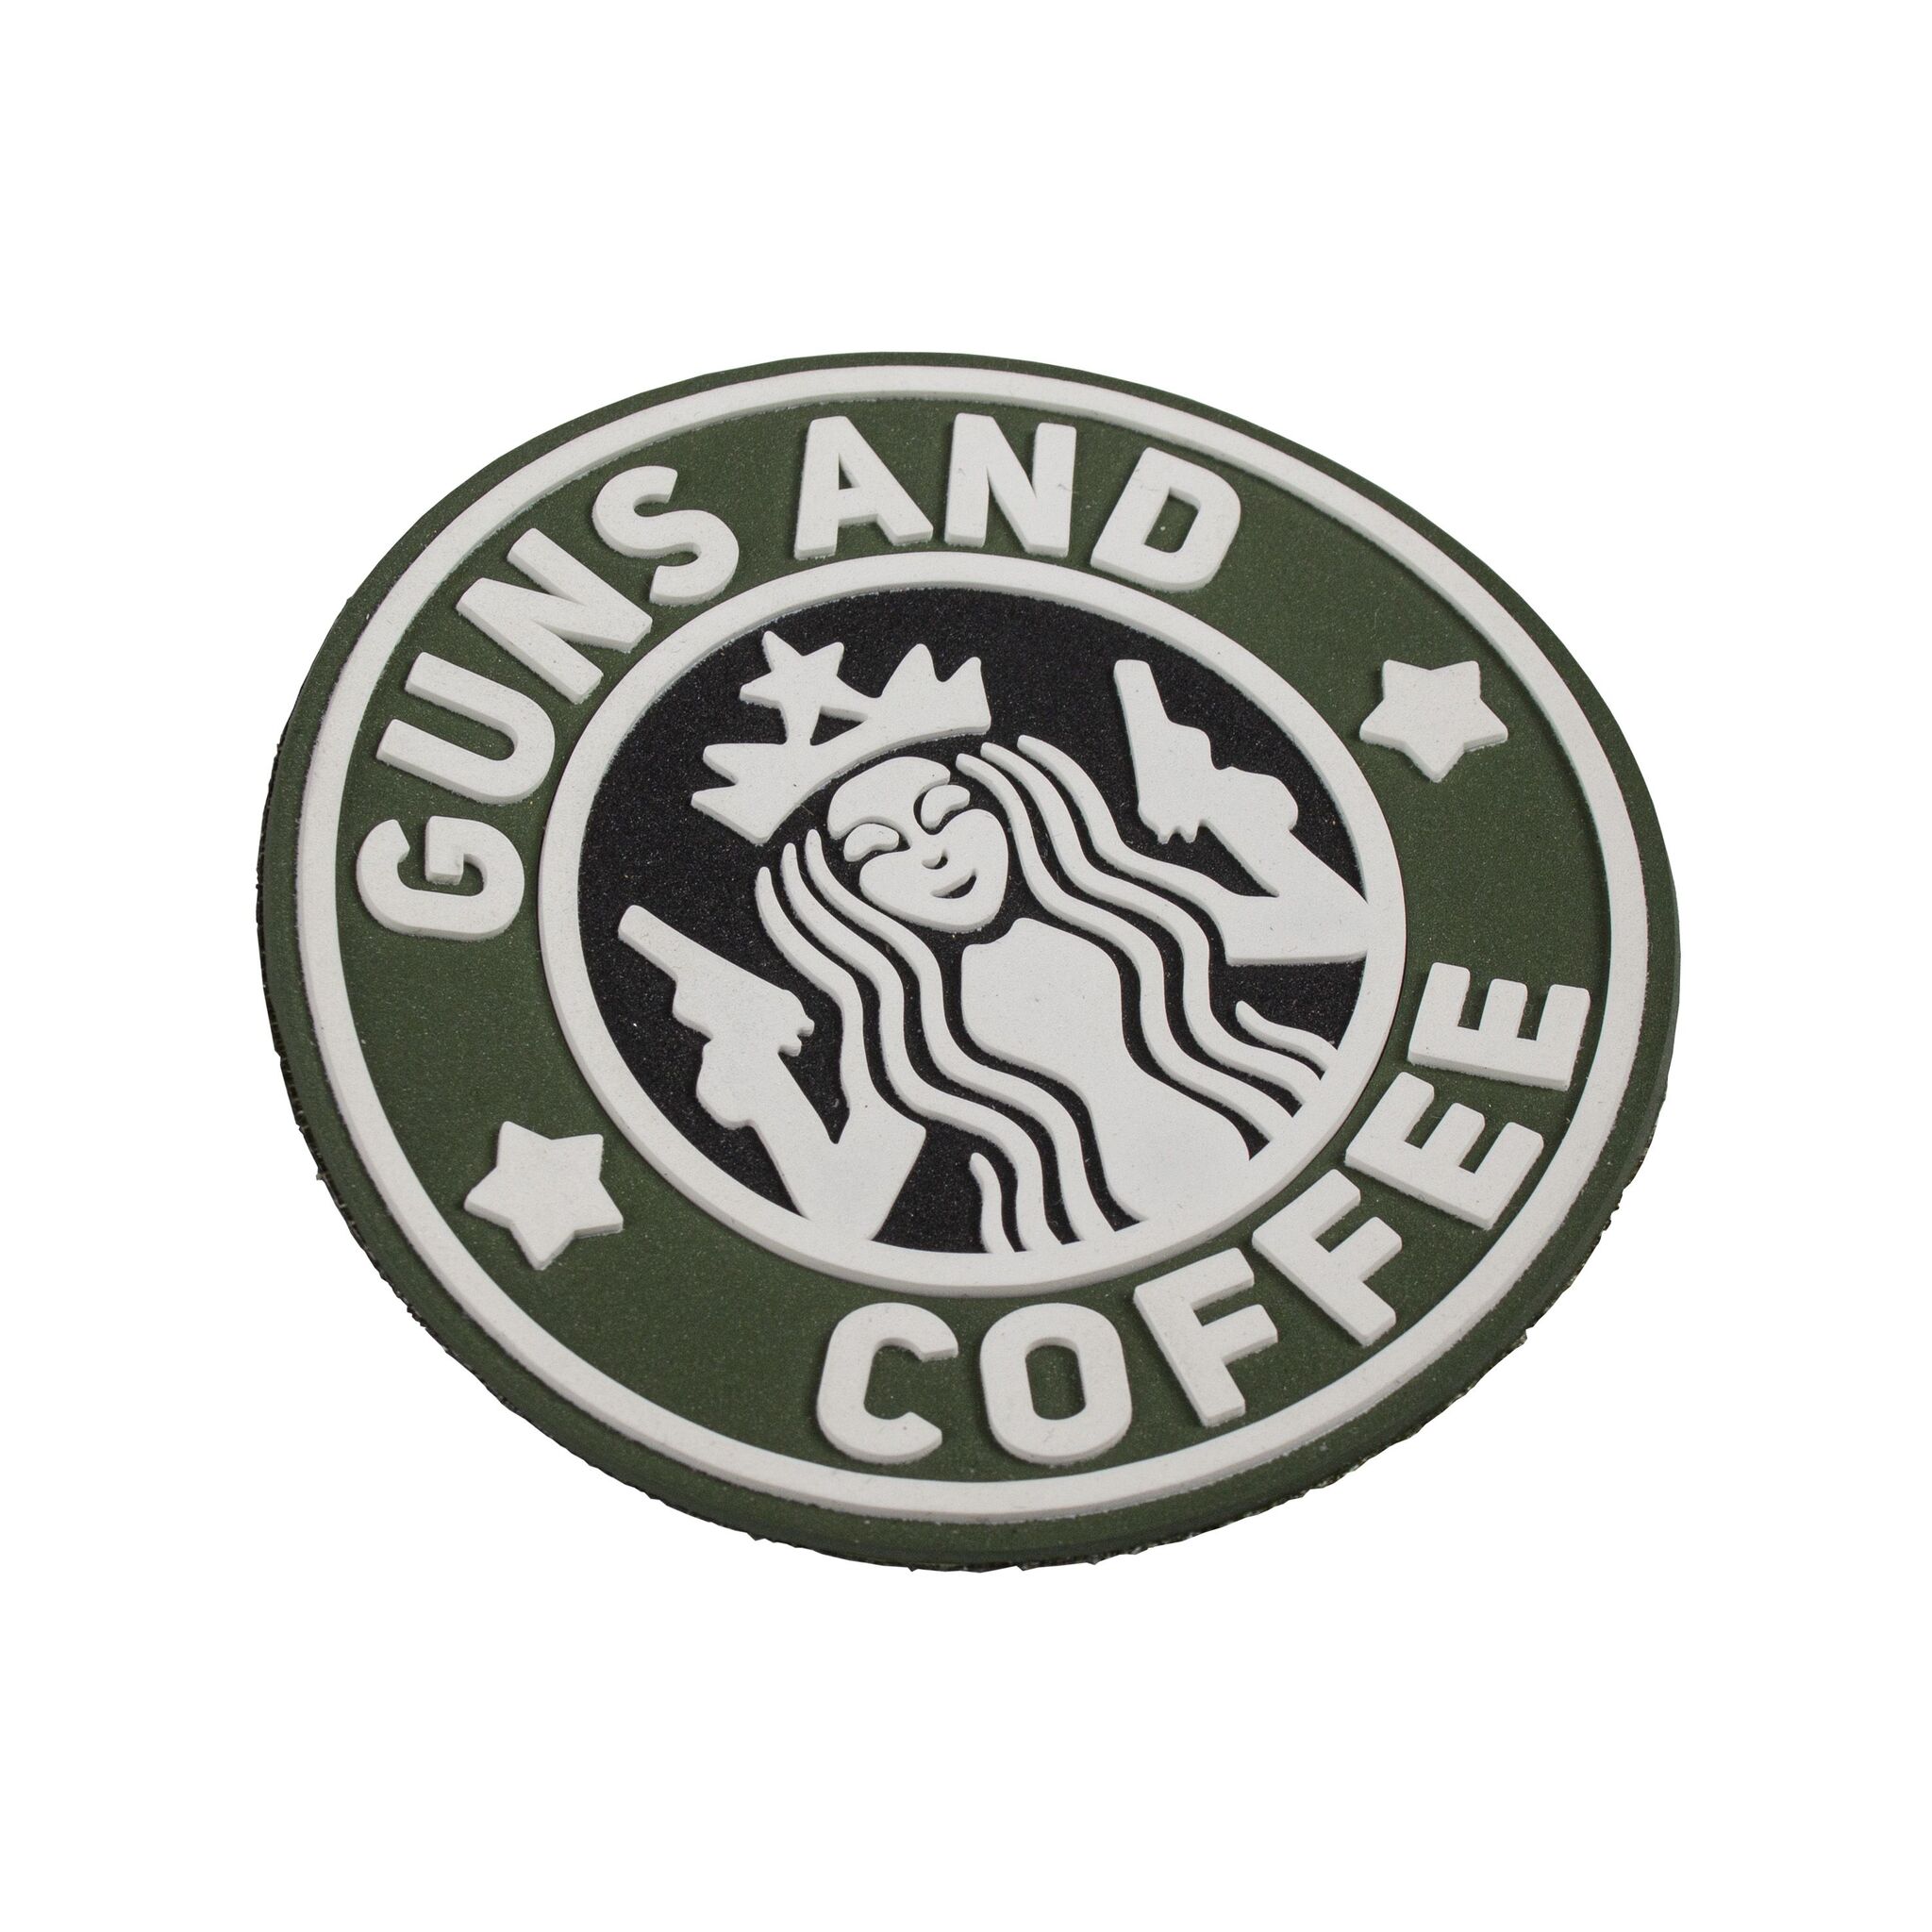 Патч ПВХ GUNS AND COFFEE